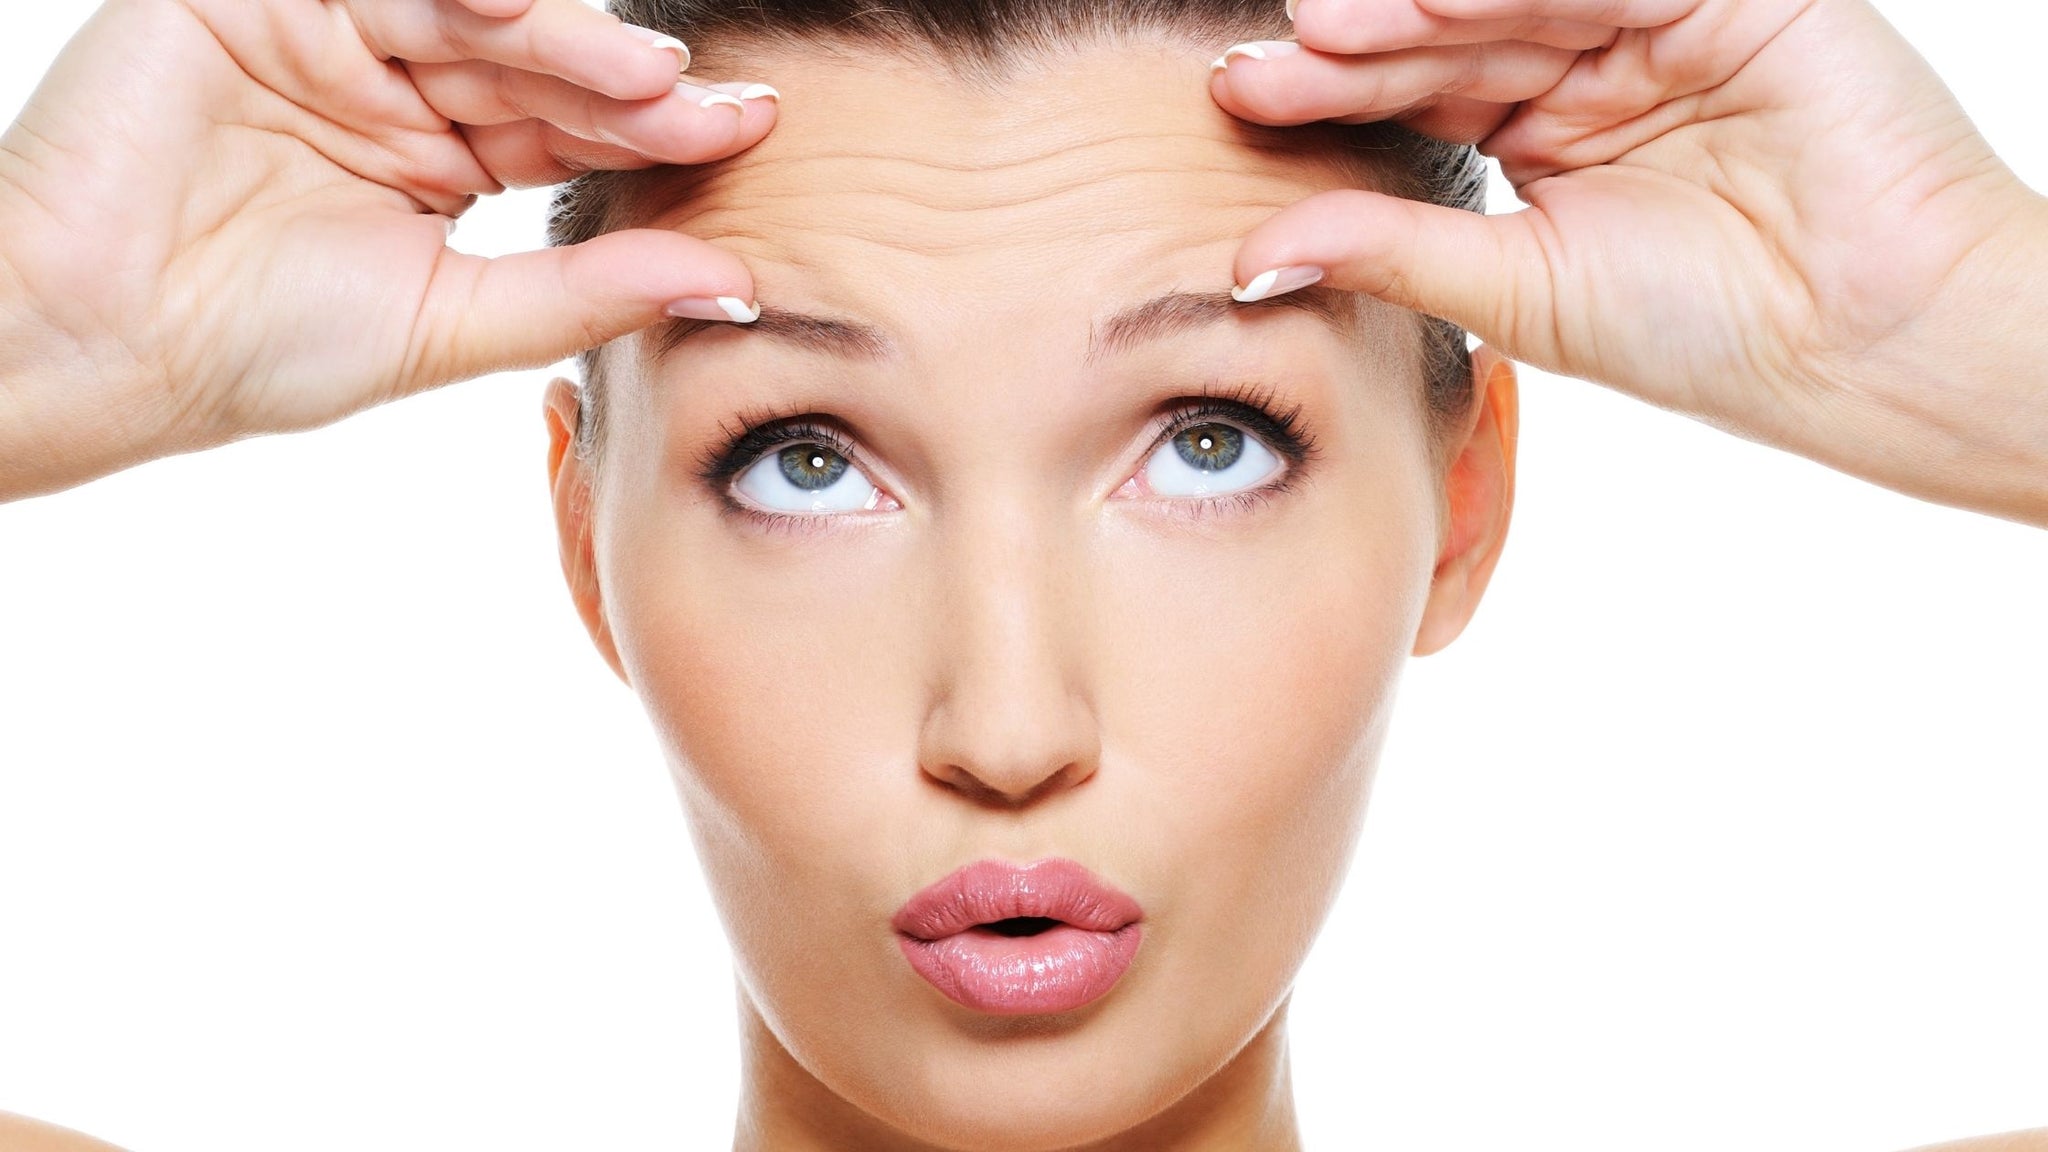 Does Dry Skin Cause Wrinkles?